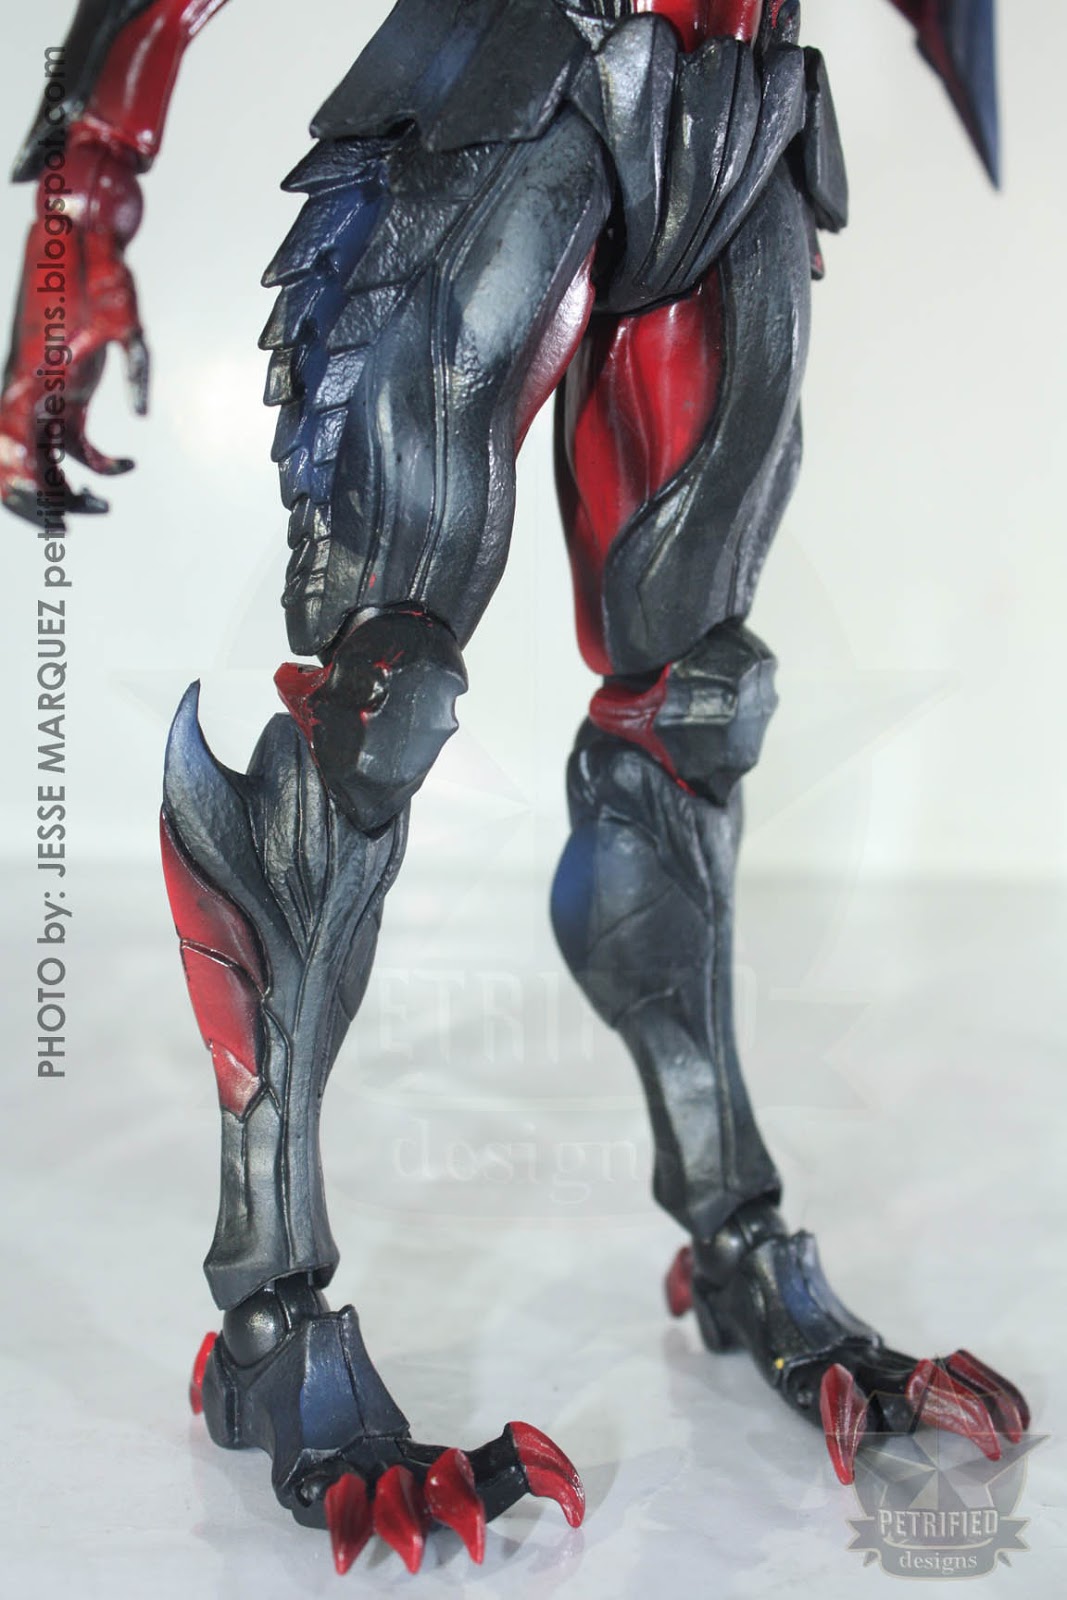 Play-Arts Kai Monster Hunter Cross Diablos Armor Figure Video Review &  Images